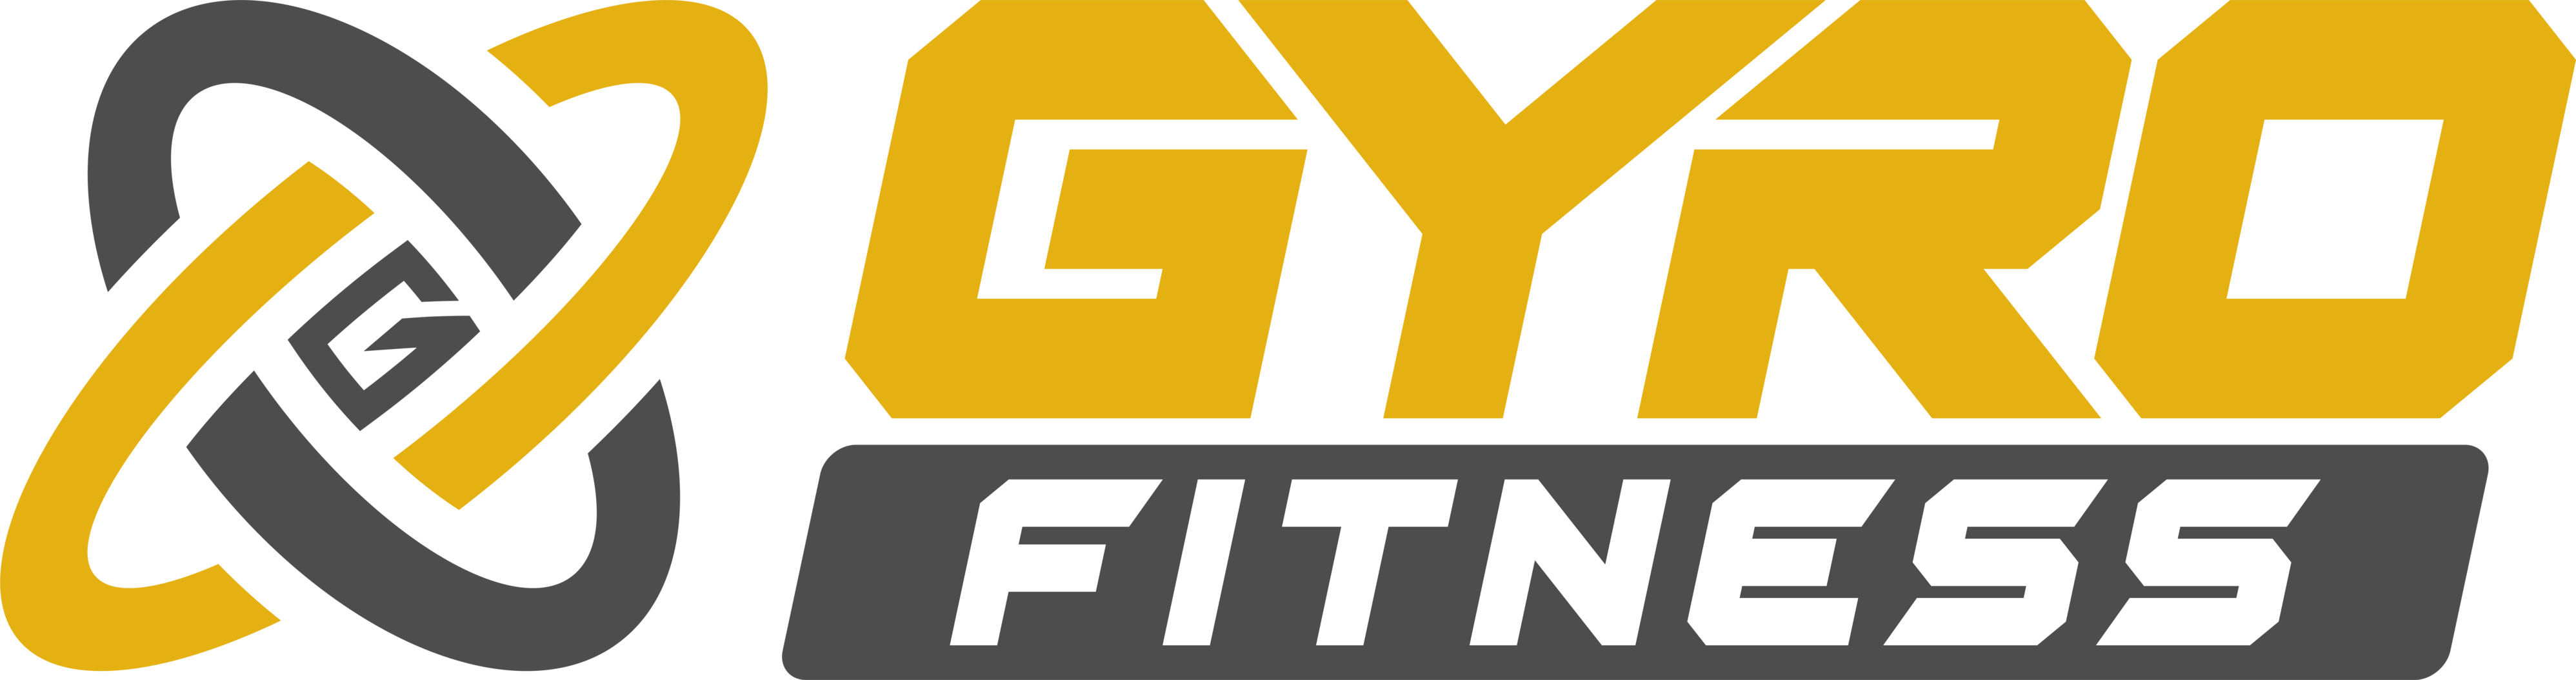 Gyro-Fitness